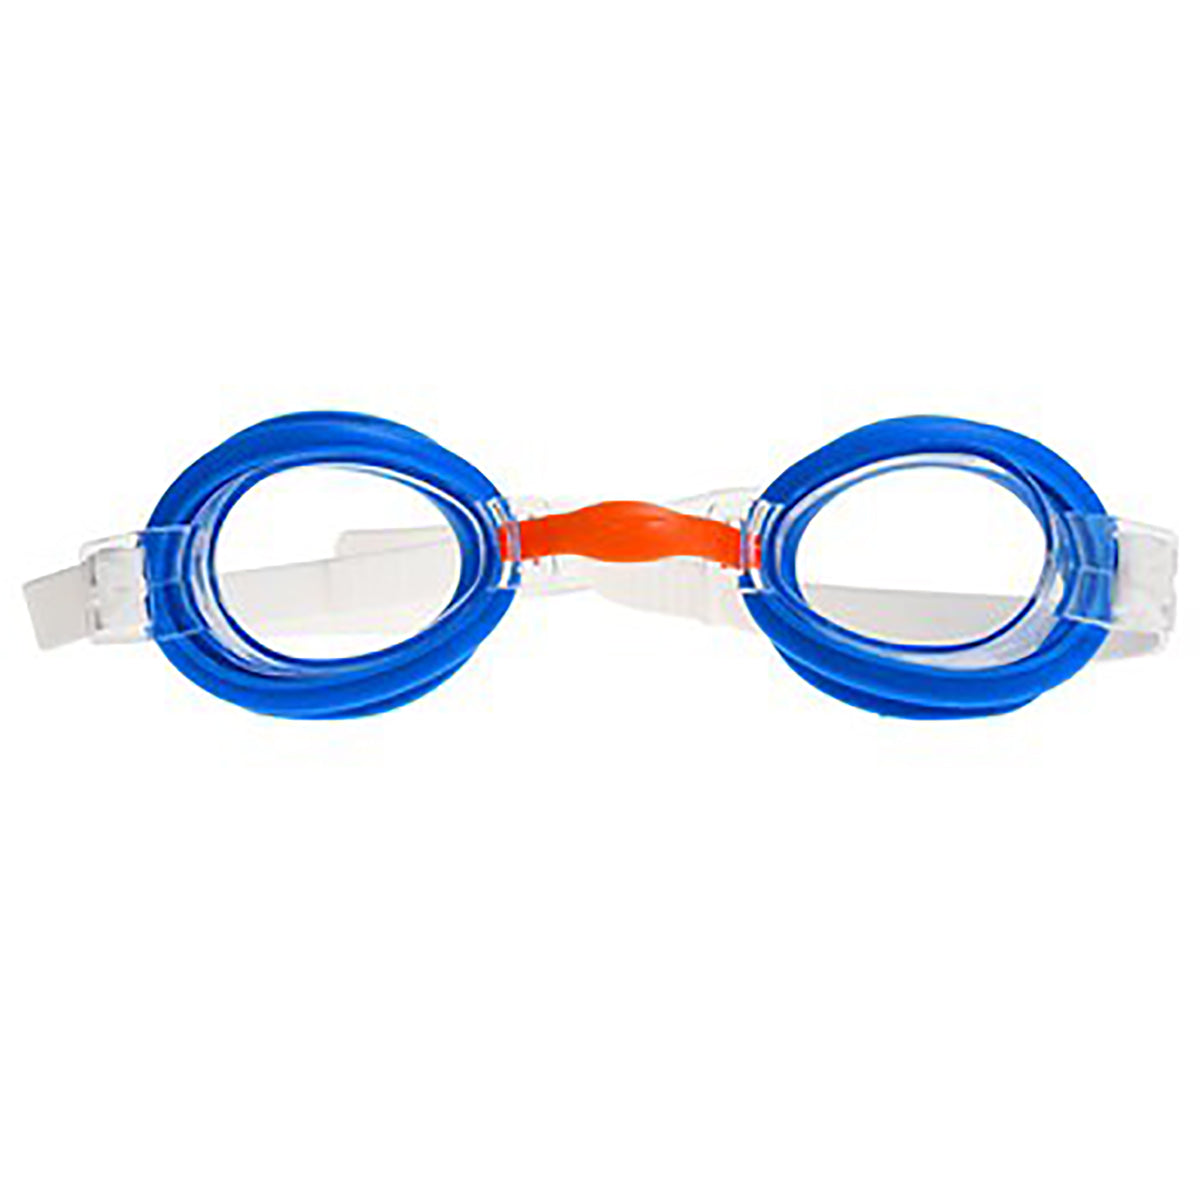 Goggle Speedo Infantil Tybee Azul